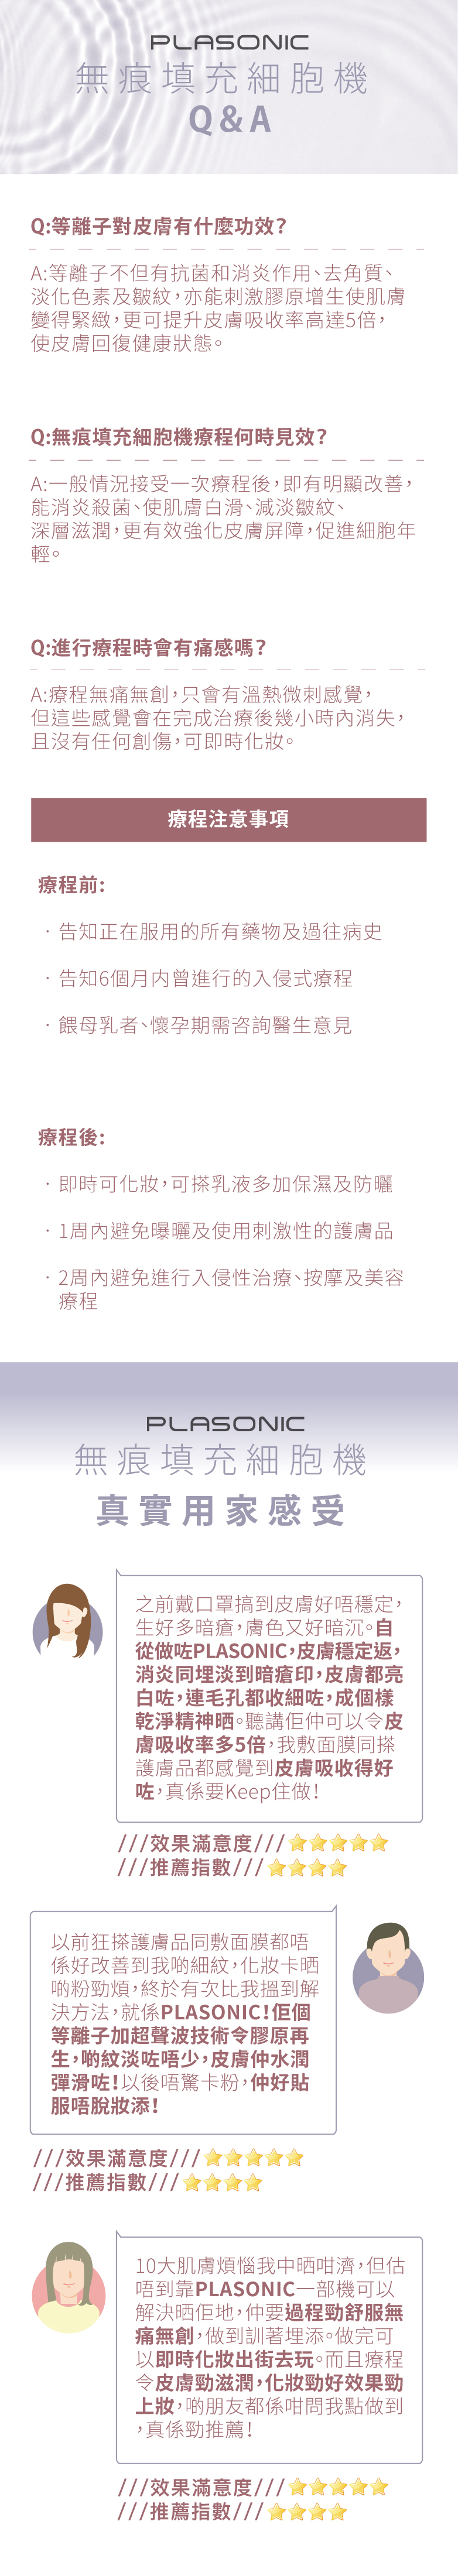 20230808_RB_Plasonic P2P_ec app version_wc-02_5.jpg